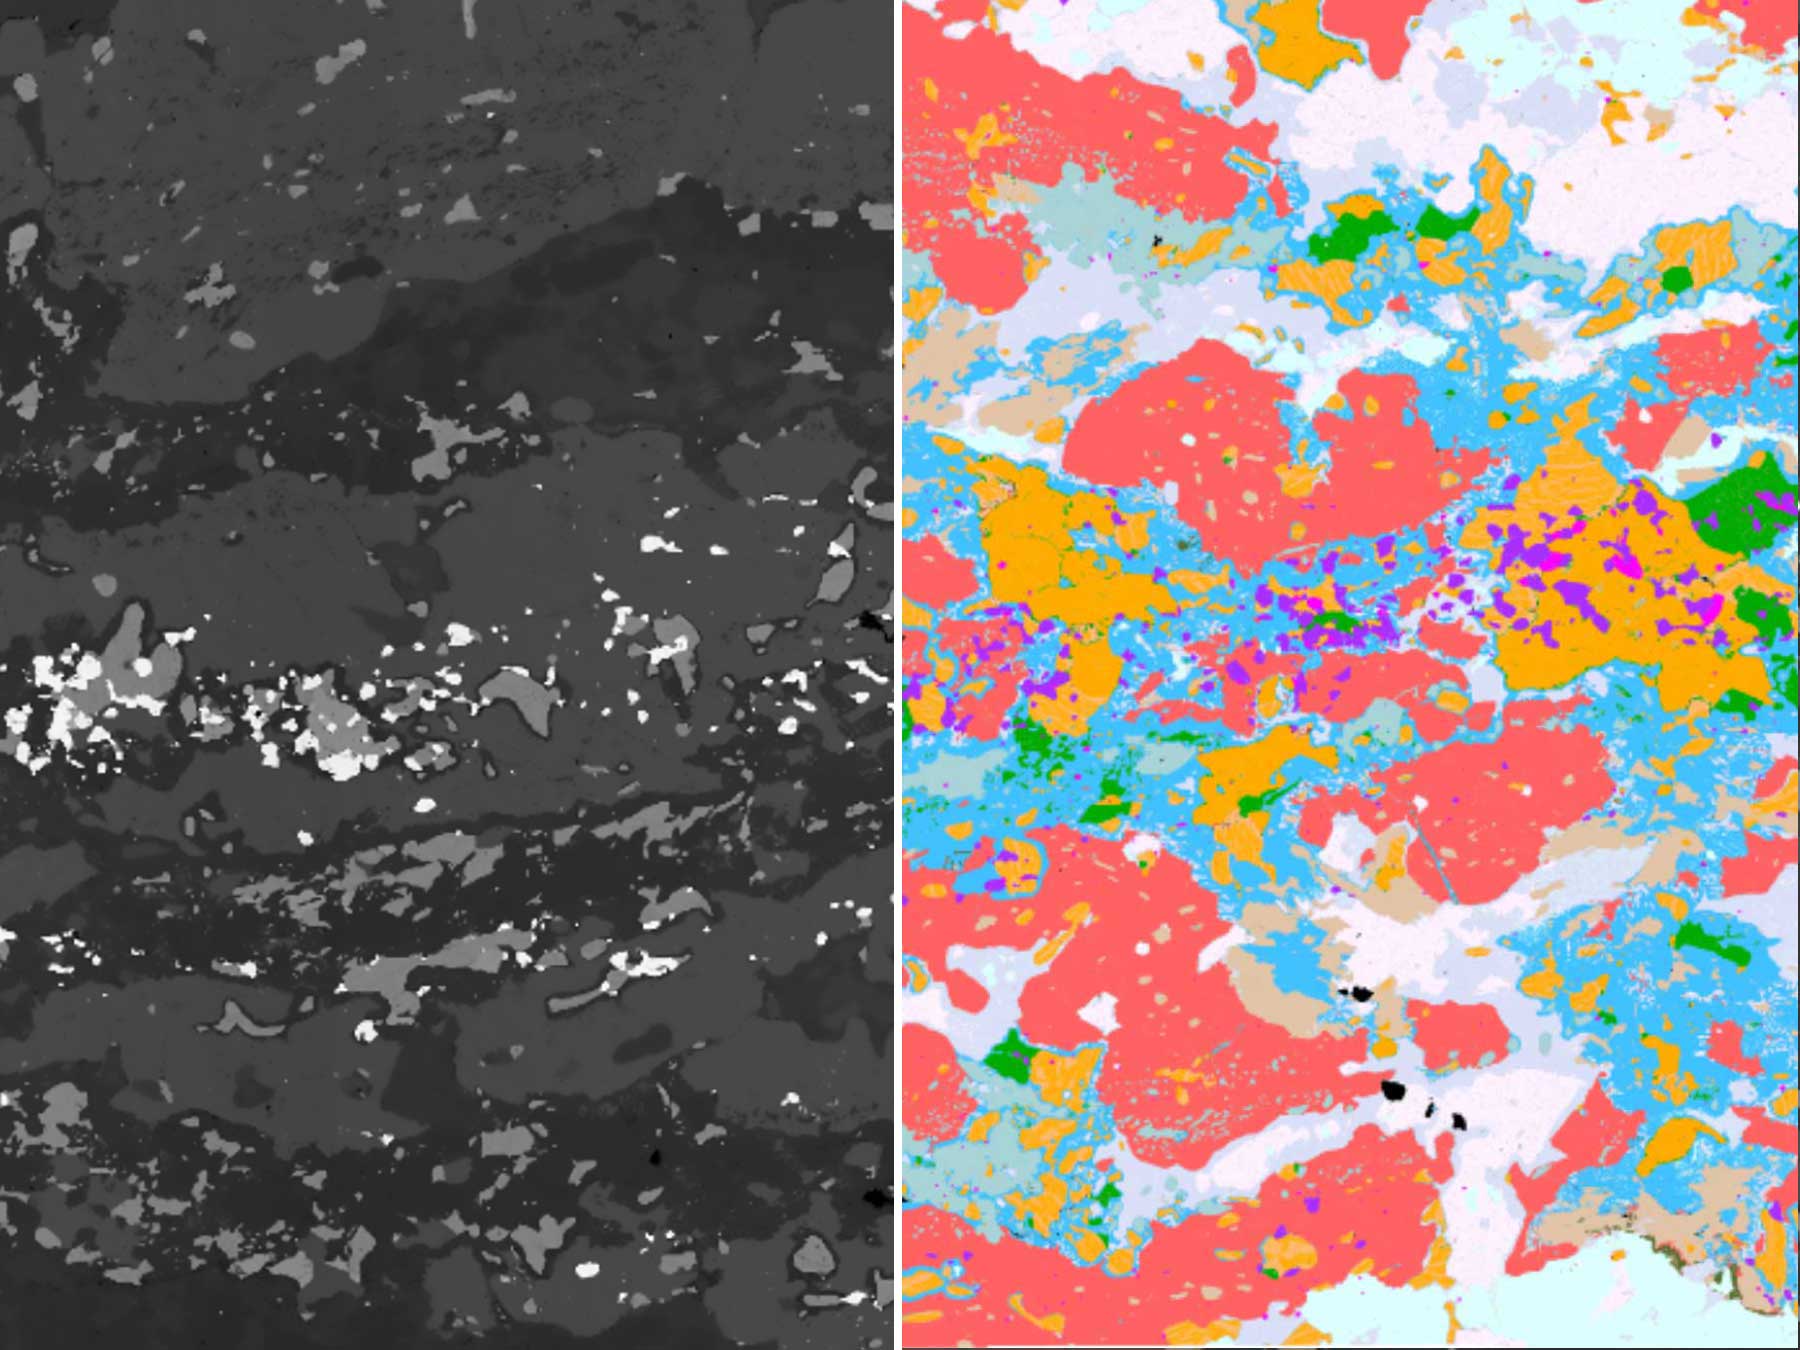 Classification of shale heterogeneity imaged by ZEISS Xradia Versa X-ray microscope